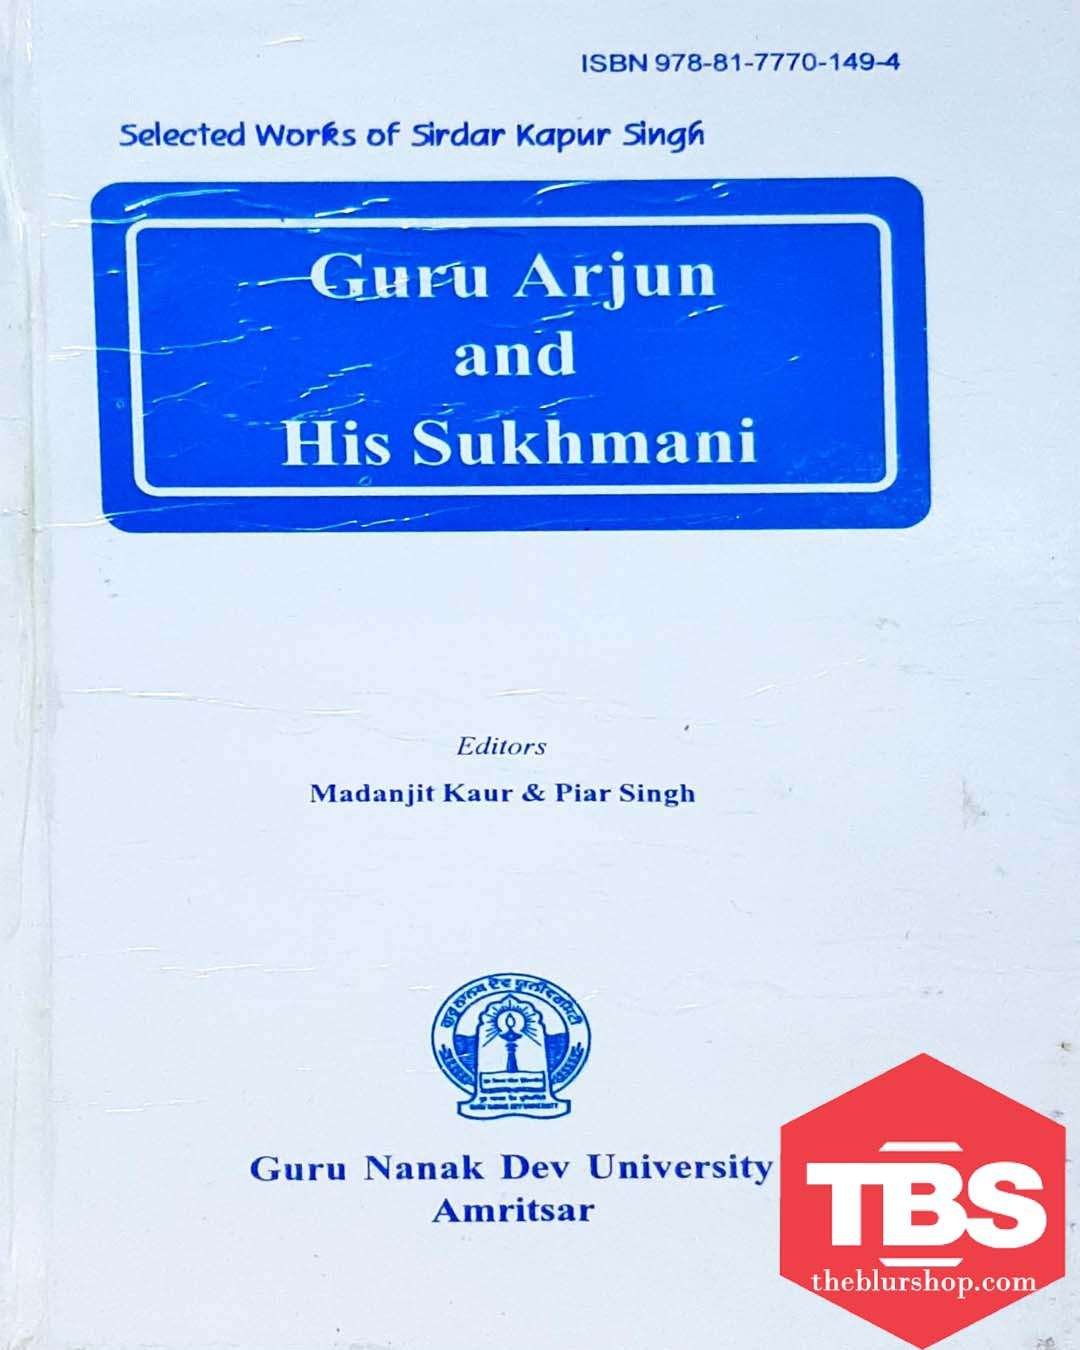 Guru Arjun and His Sukhmani